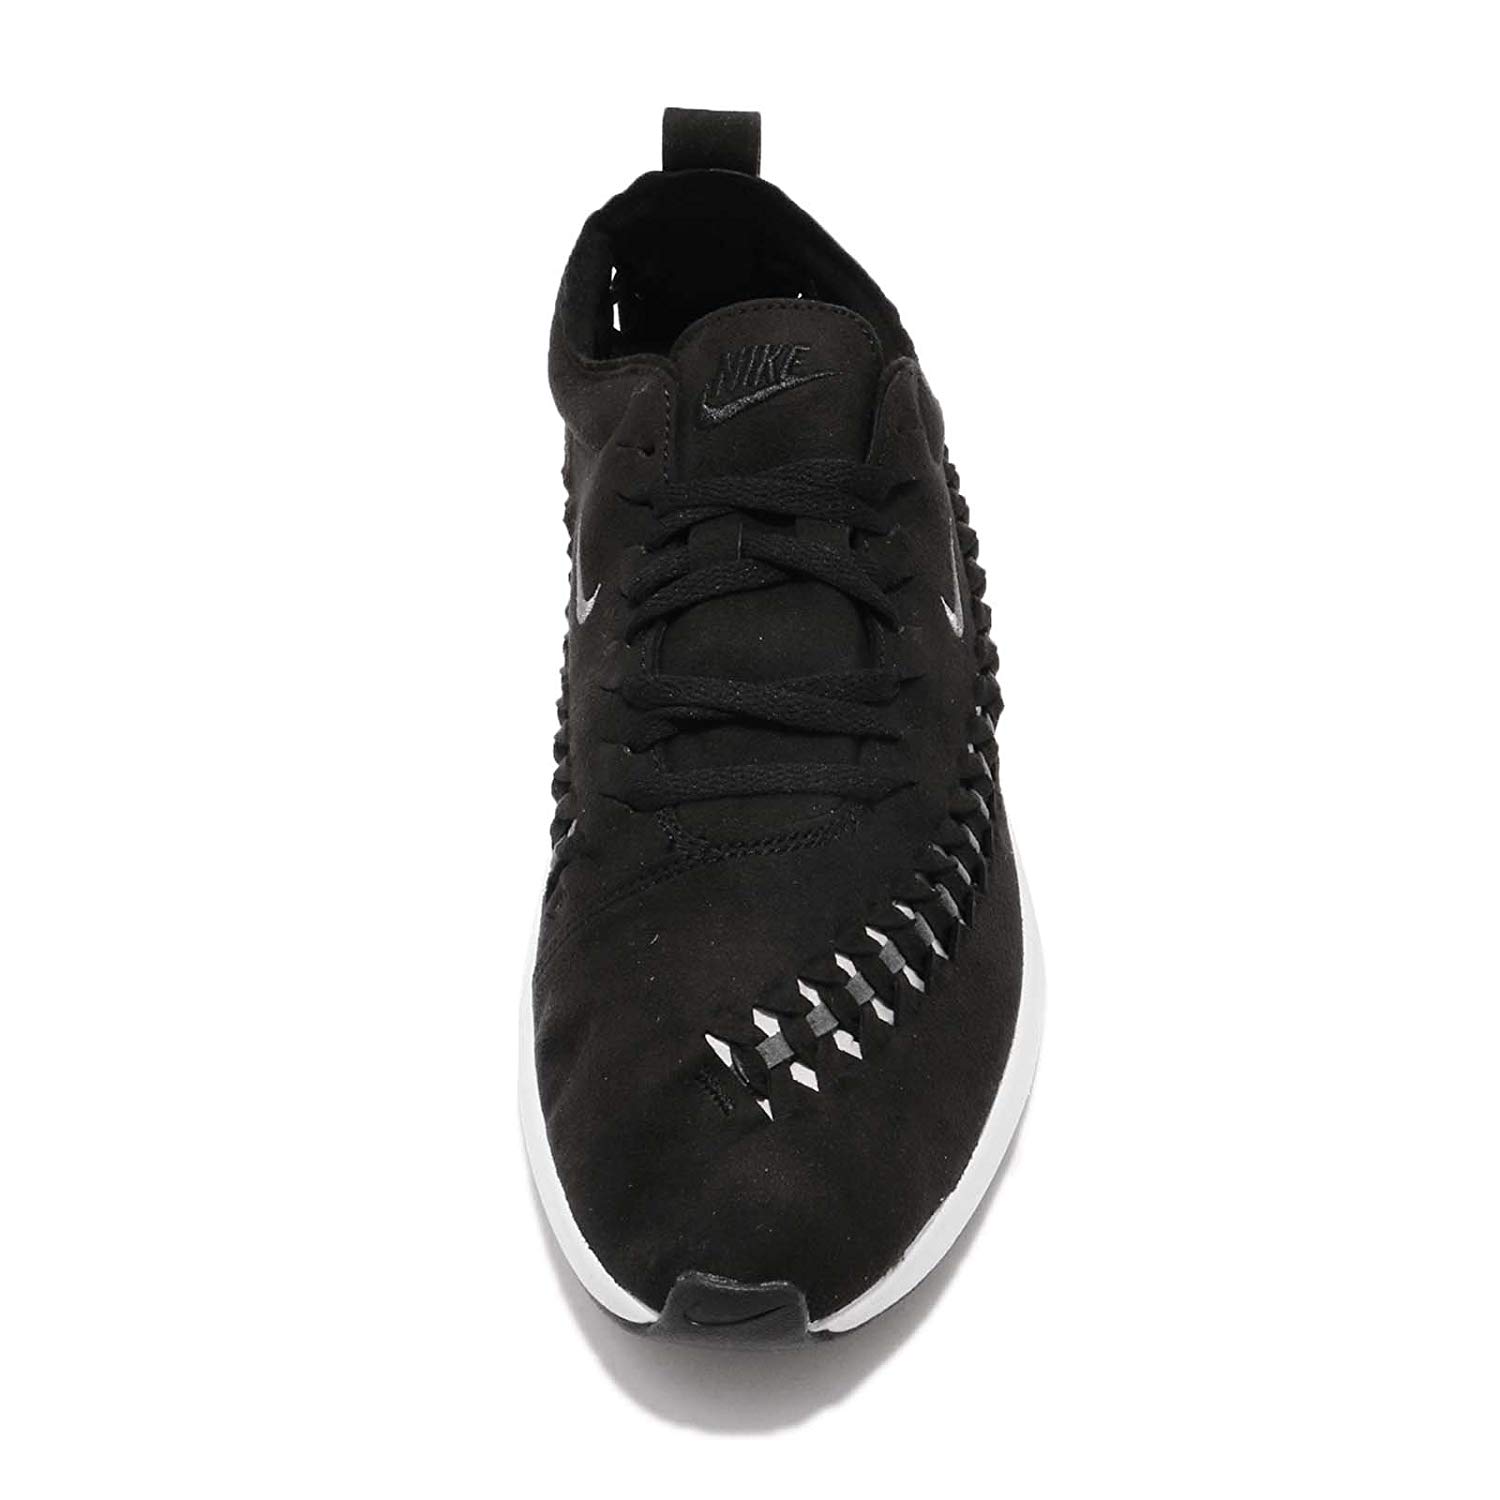 Nike Men's Dualtone Racer Woven Running Shoes (9.5, Black/Dark Grey-white) - image 3 of 6